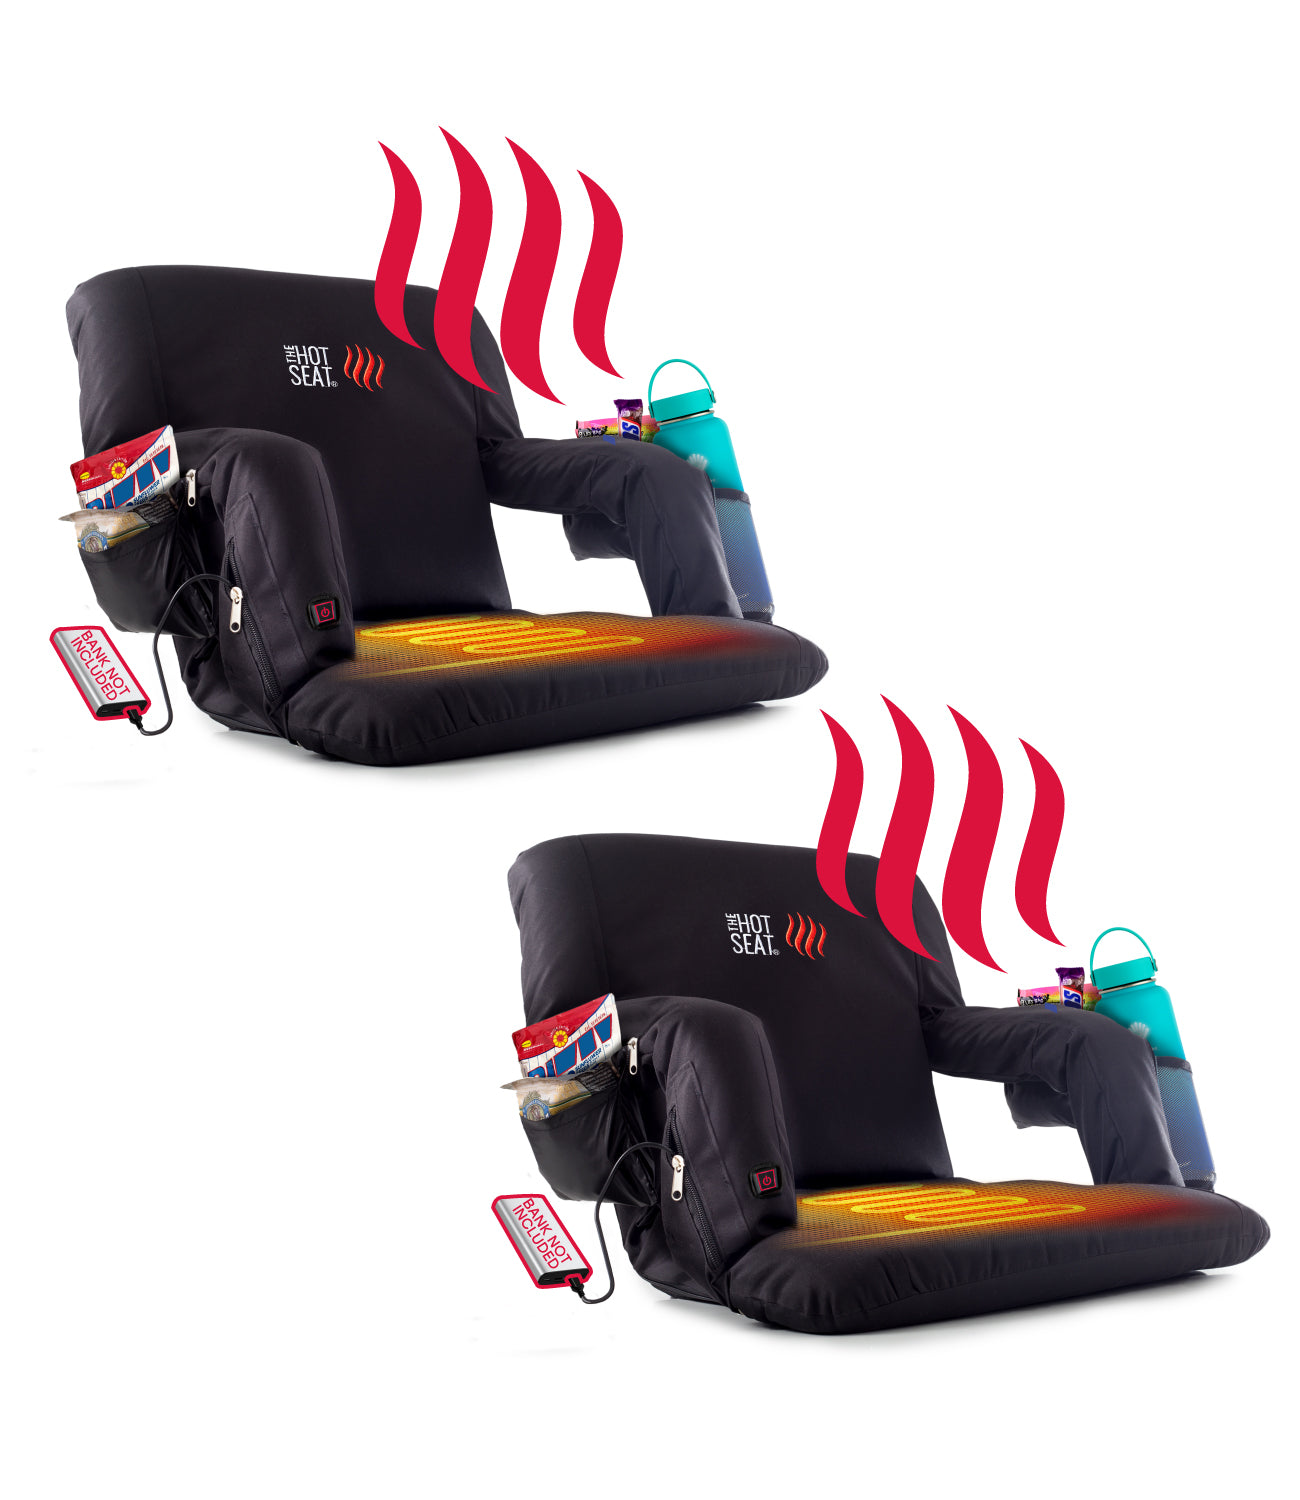 Portable Heated Seat Cushion, 3 Mode Adjustable Heat Heating Cushion, USB  Heated Foldable Back Chair Pad, Memory Foam Heated Seat Pad For Indoor